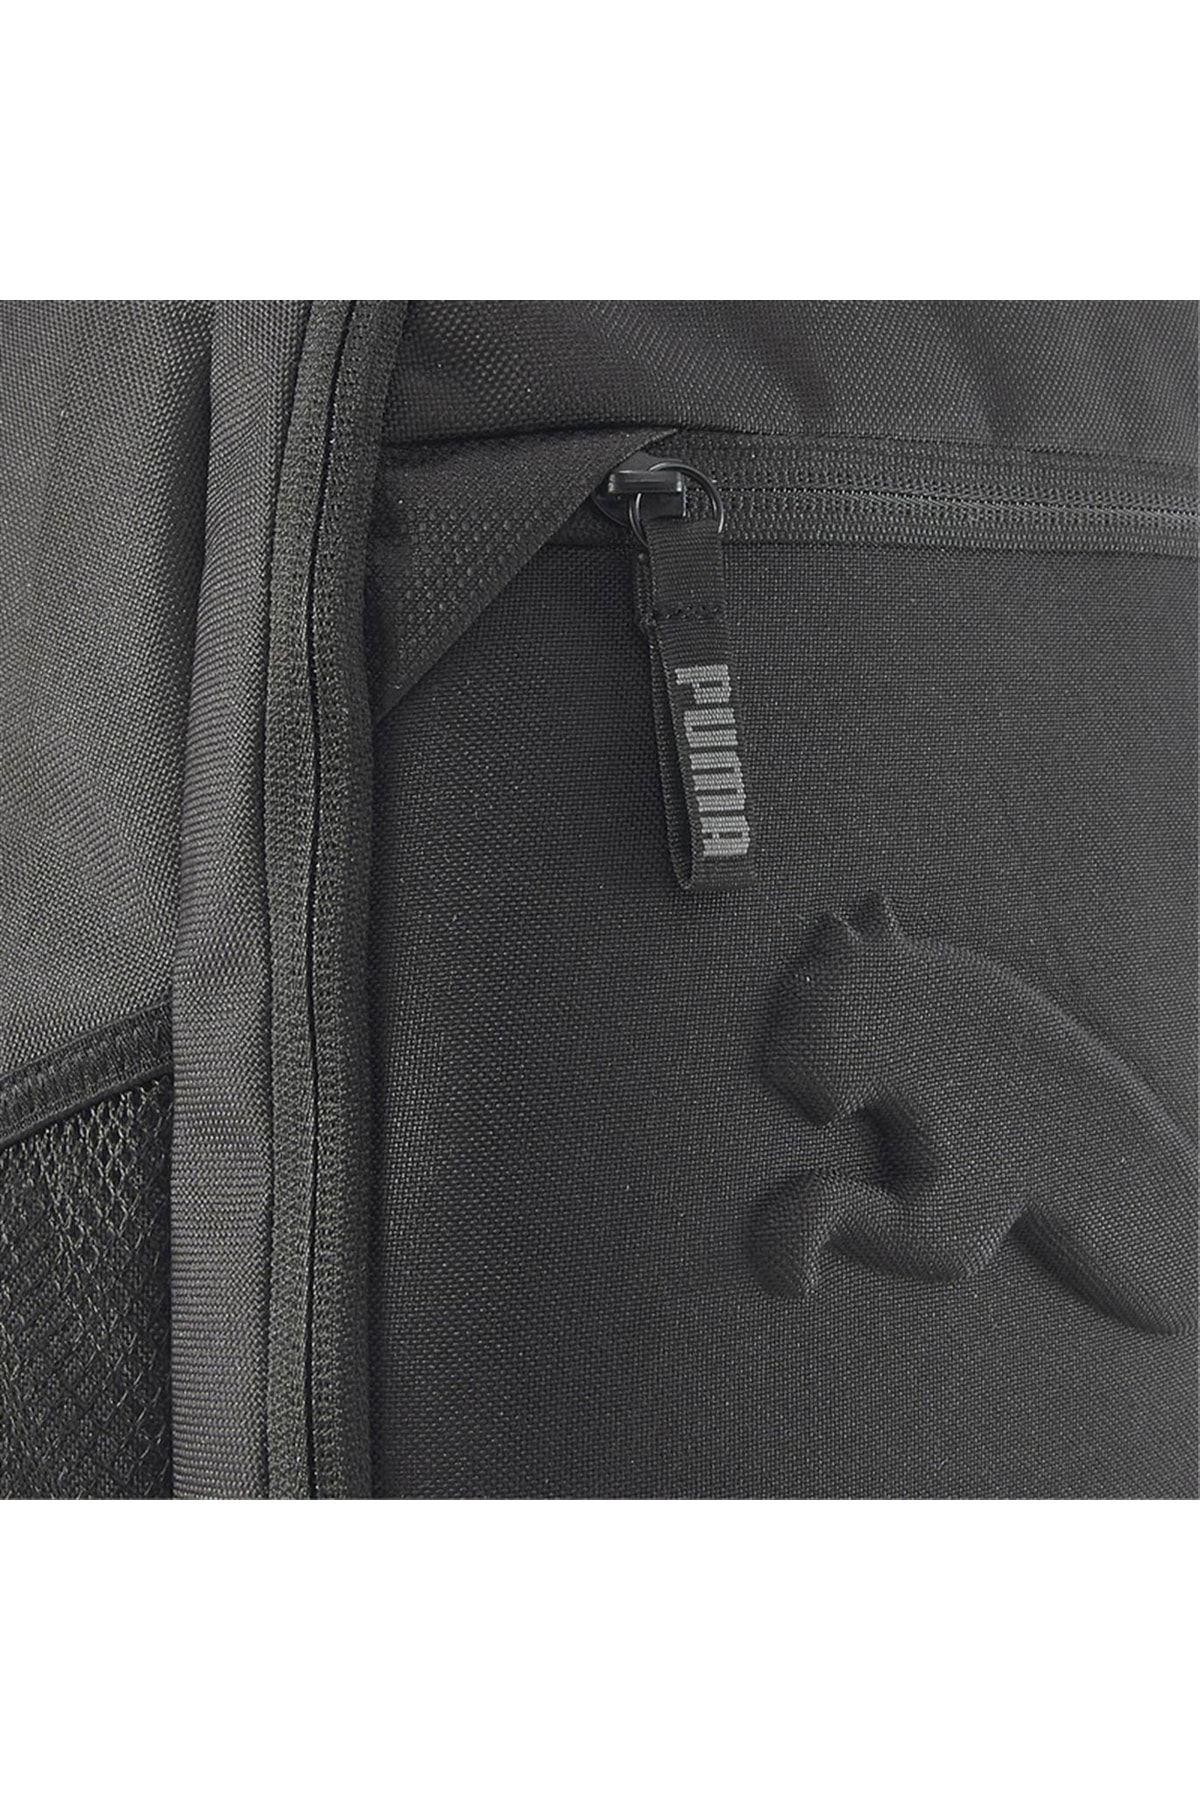 Puma Buzz مشکی Backpack 07913601